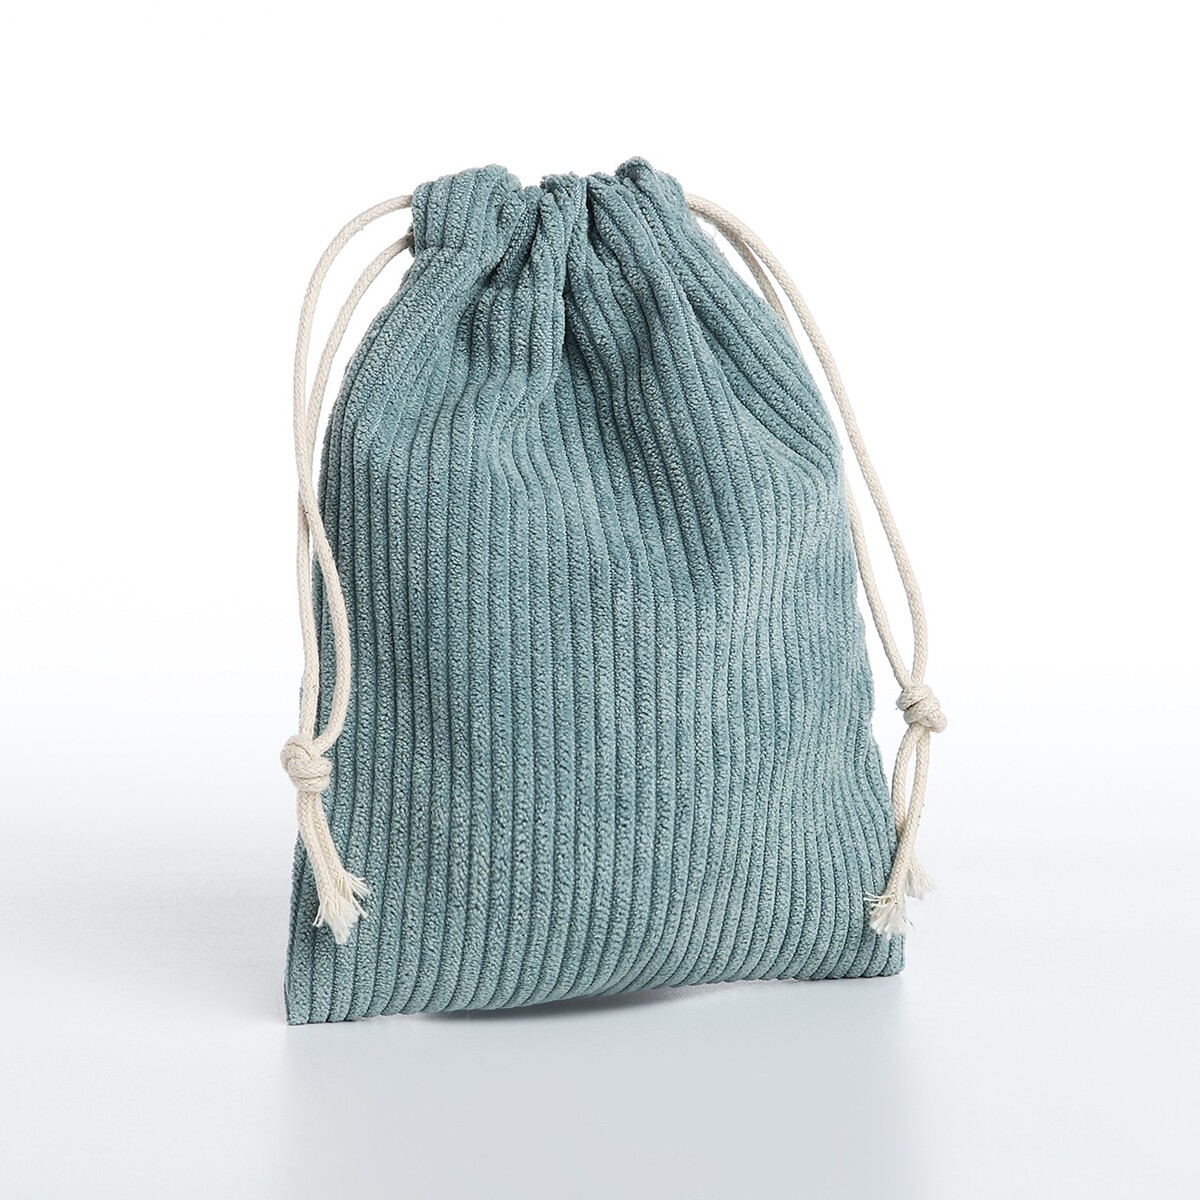 Косметичка - мешок с завязками, цвет голубой No brand